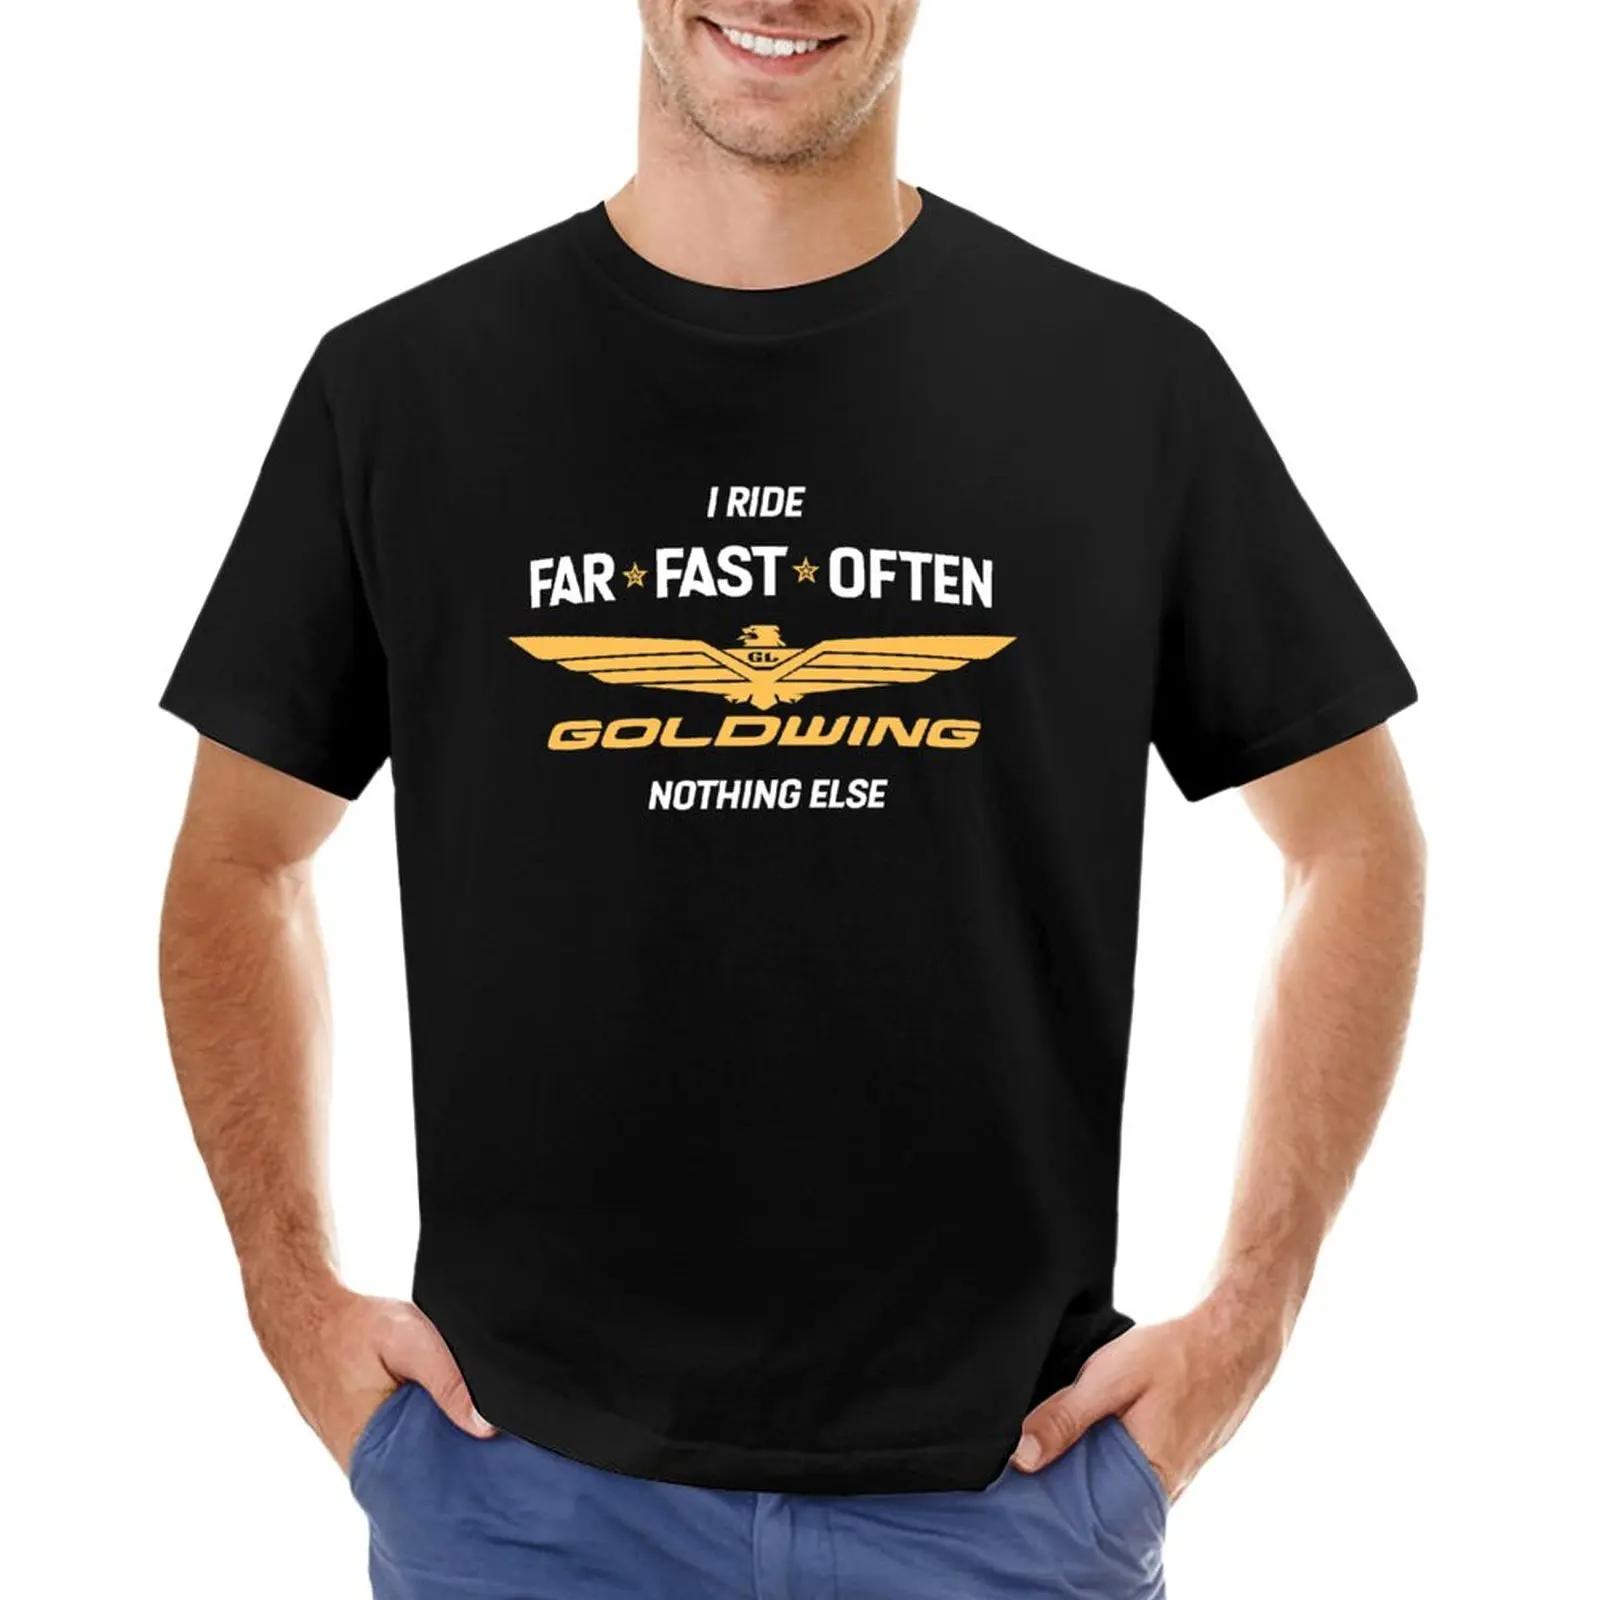 Goldwing motorcycle wing wingit trike bike T Shirt T-Shirt sweat shirt custom t shirts Short sleeve mens funny t shi